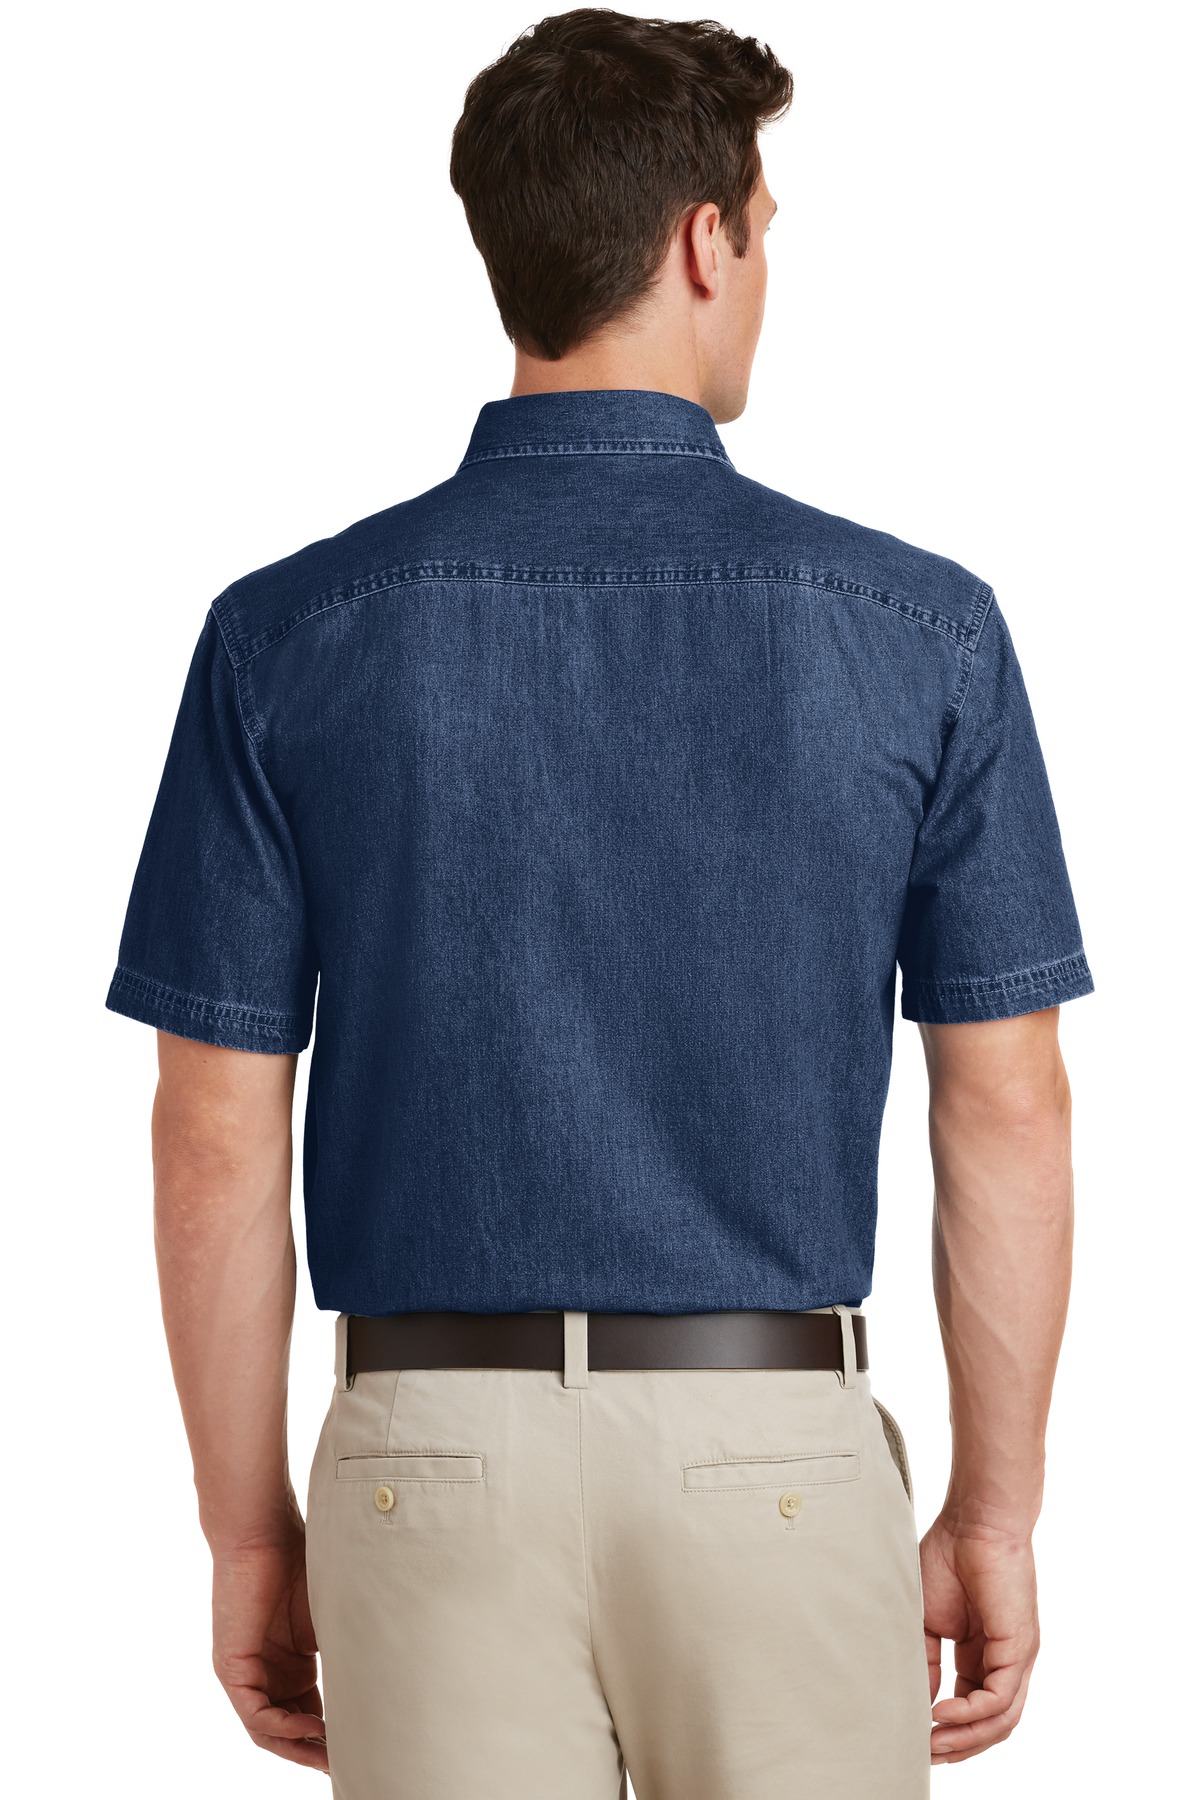 "Port & Company Short Sleeve Value Denim Shirt (SP11) Ink Blue, XL" - image 3 of 6